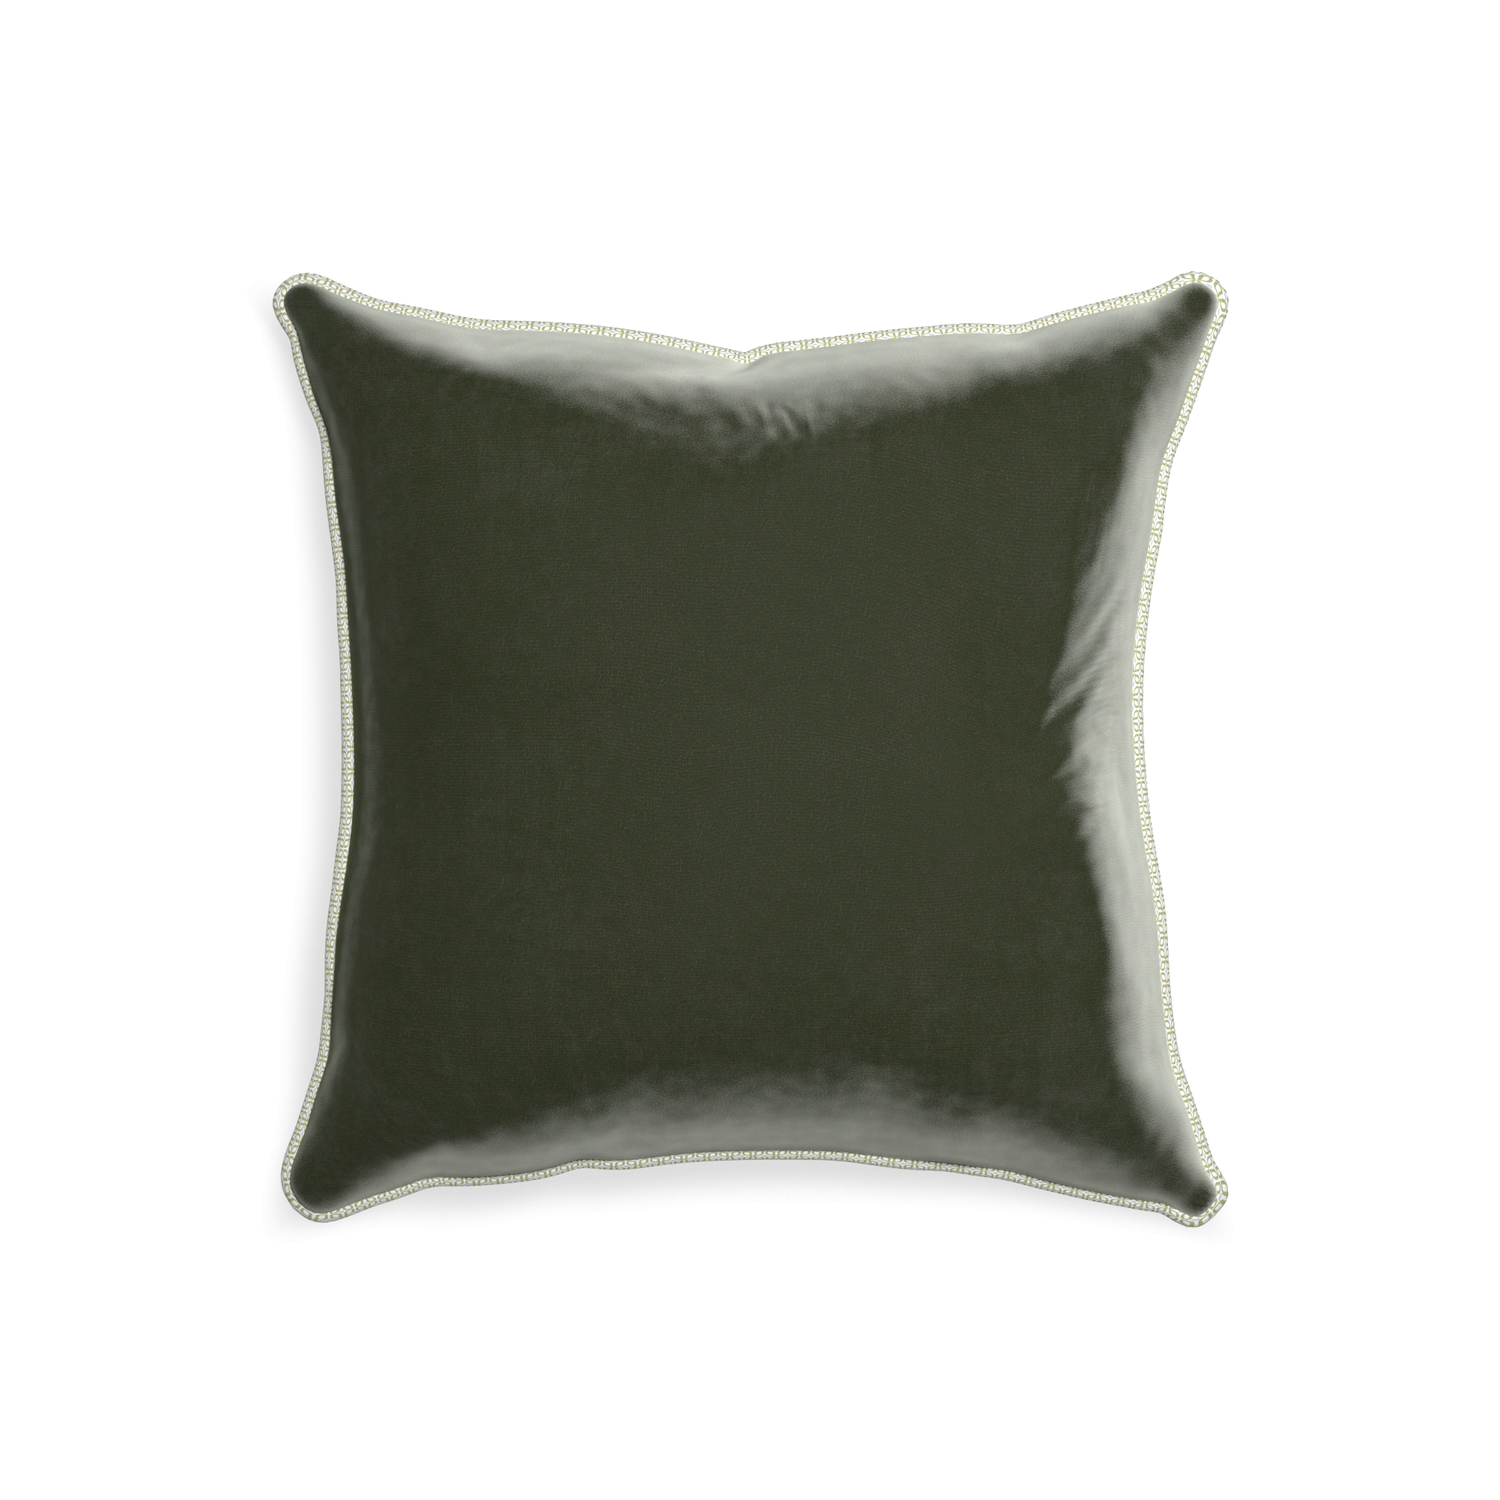 20-square fern velvet custom pillow with l piping on white background